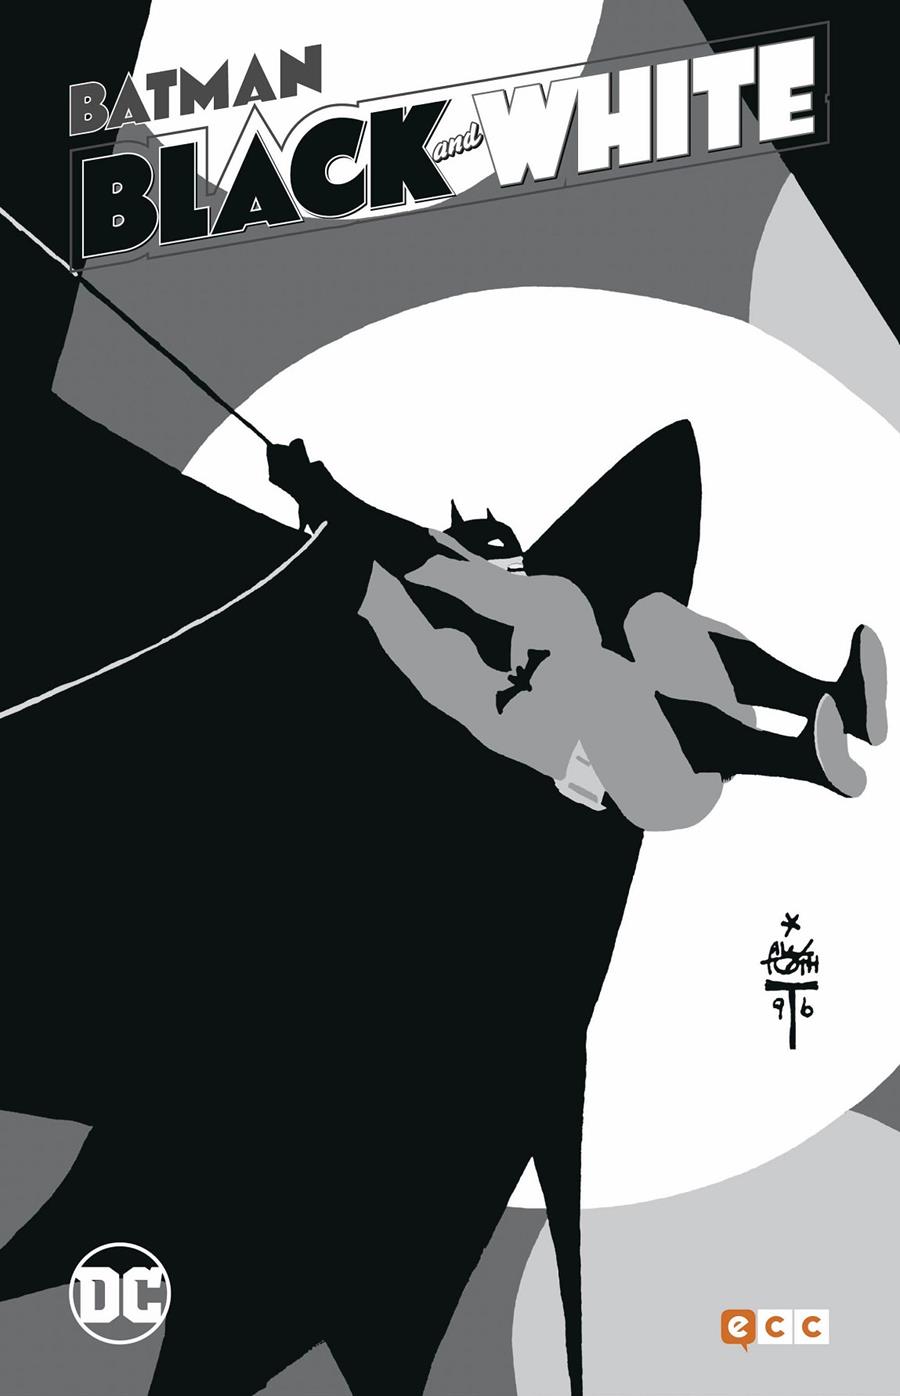 BATMAN BLACK AND WHITE VOLUMEN 1 (2ª EDICION) [CARTONE] | Akira Comics  - libreria donde comprar comics, juegos y libros online